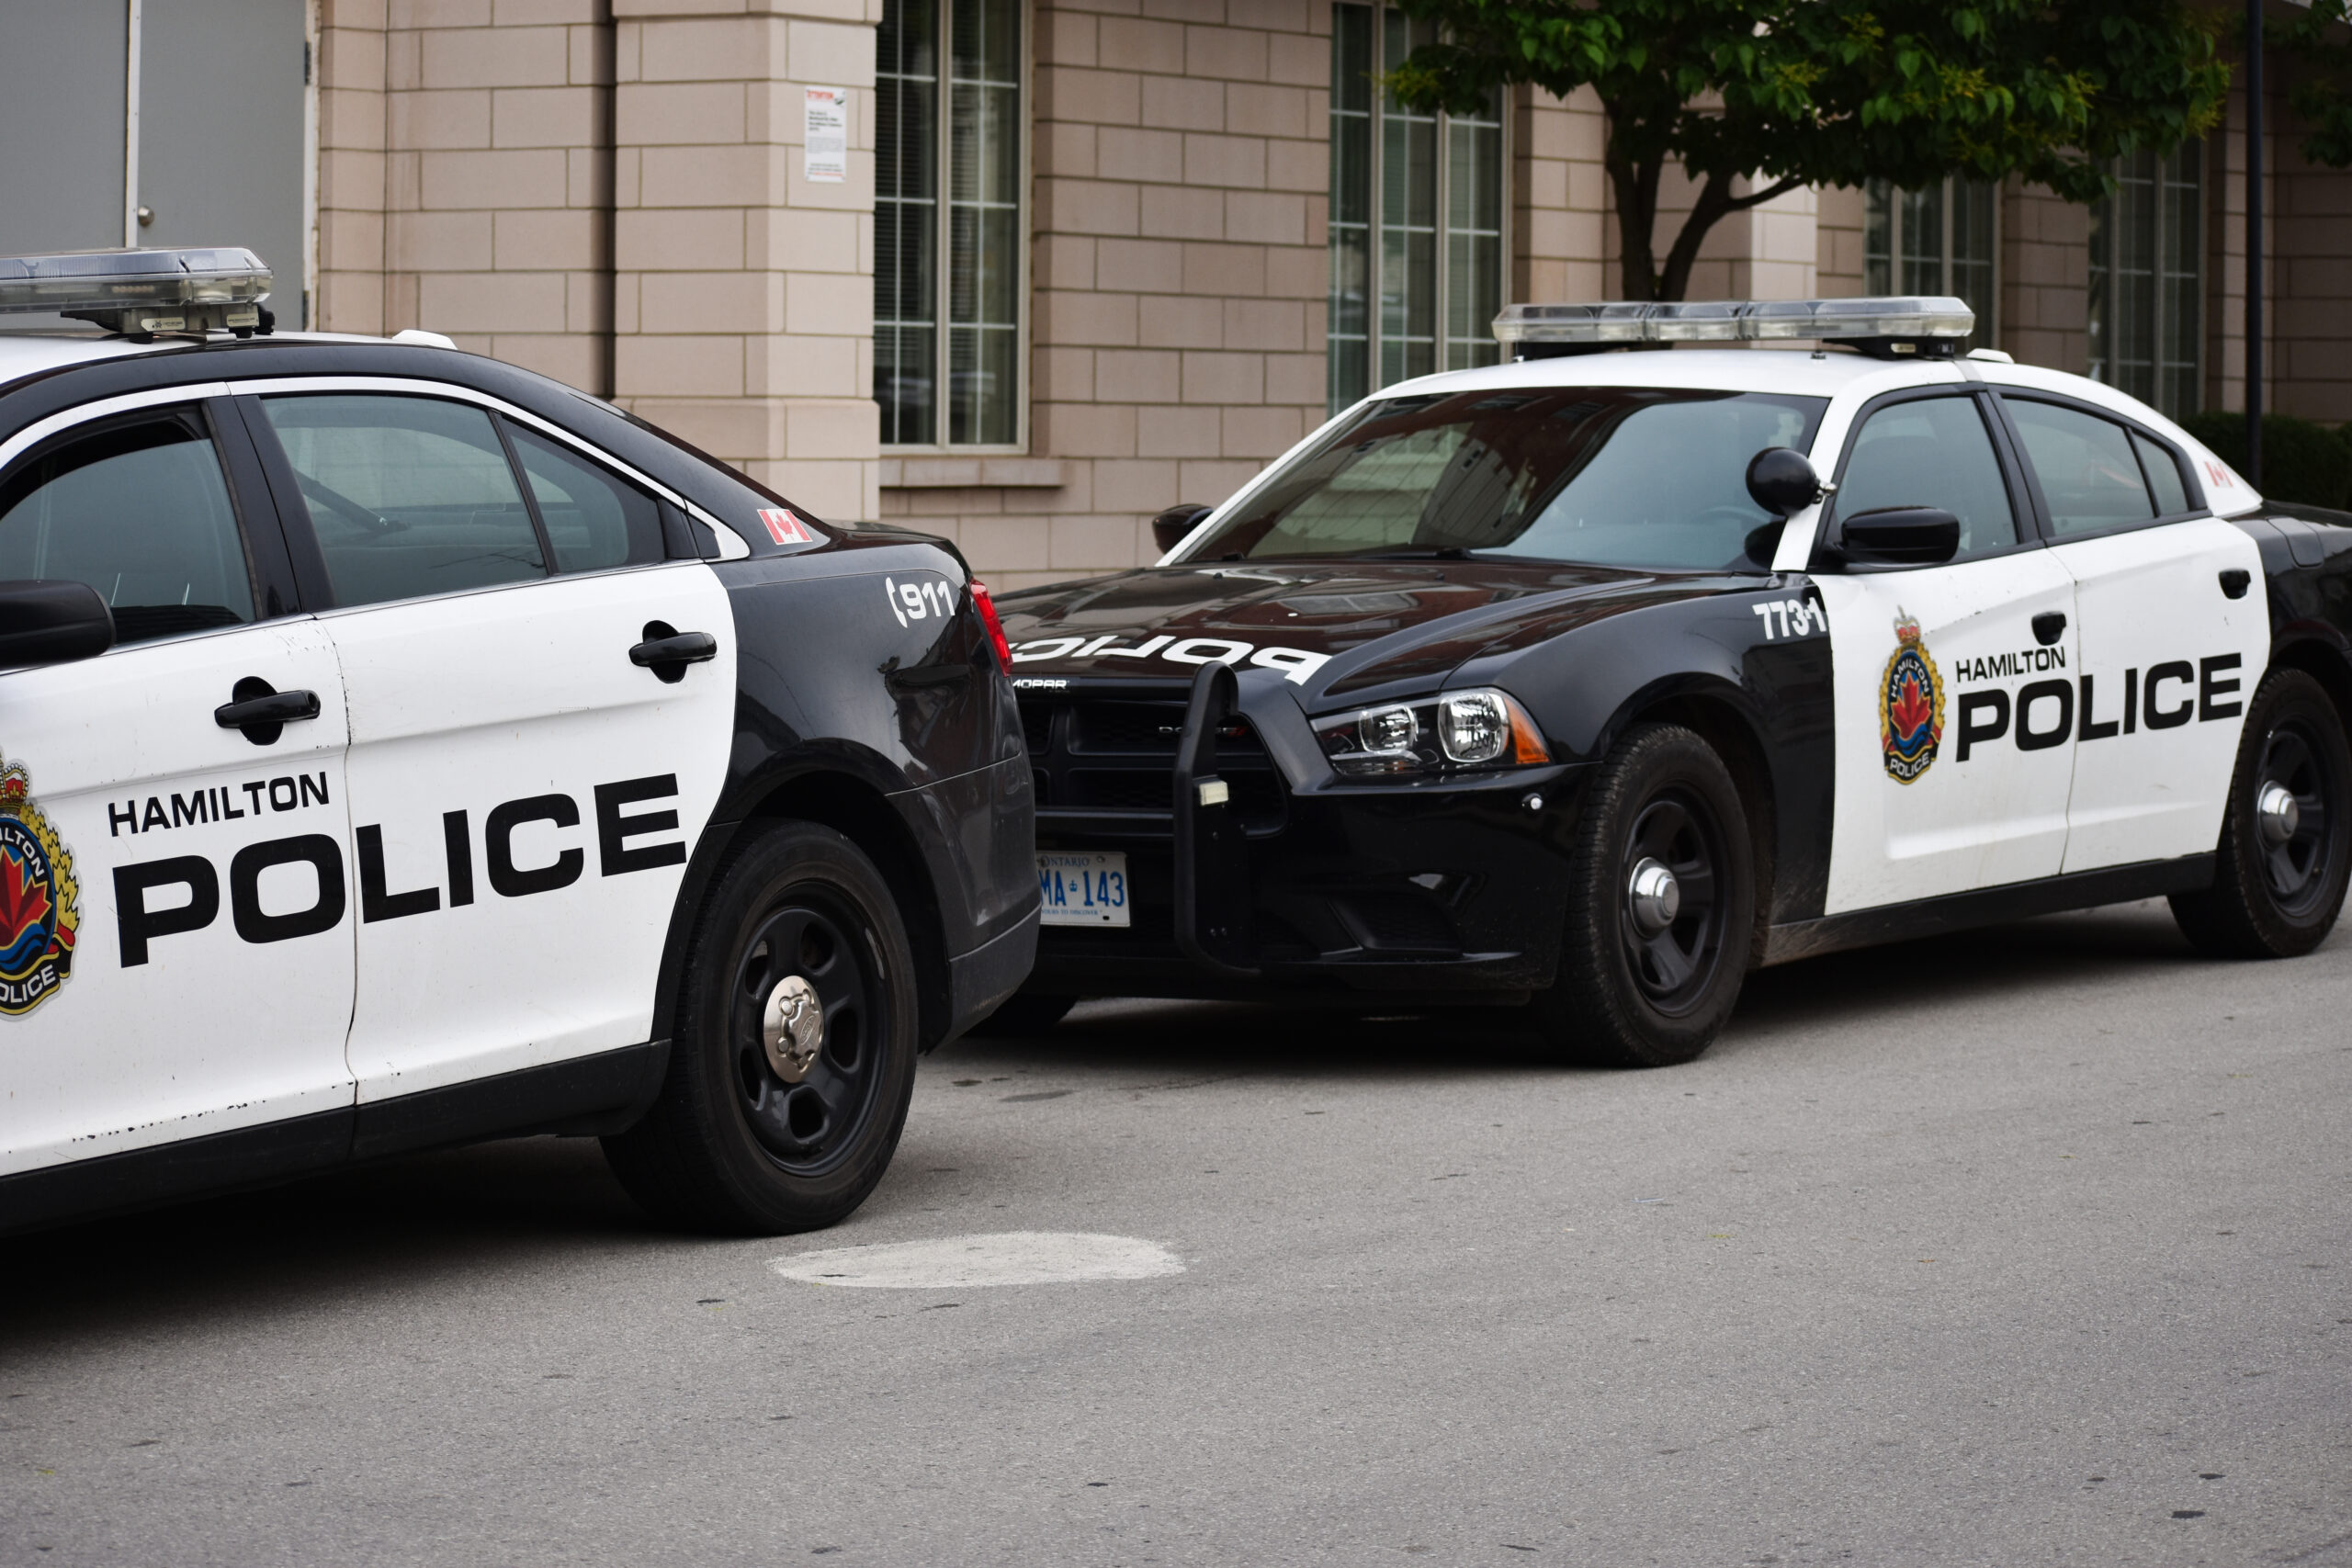 Two Hamilton Police Cruiser cars on a street.